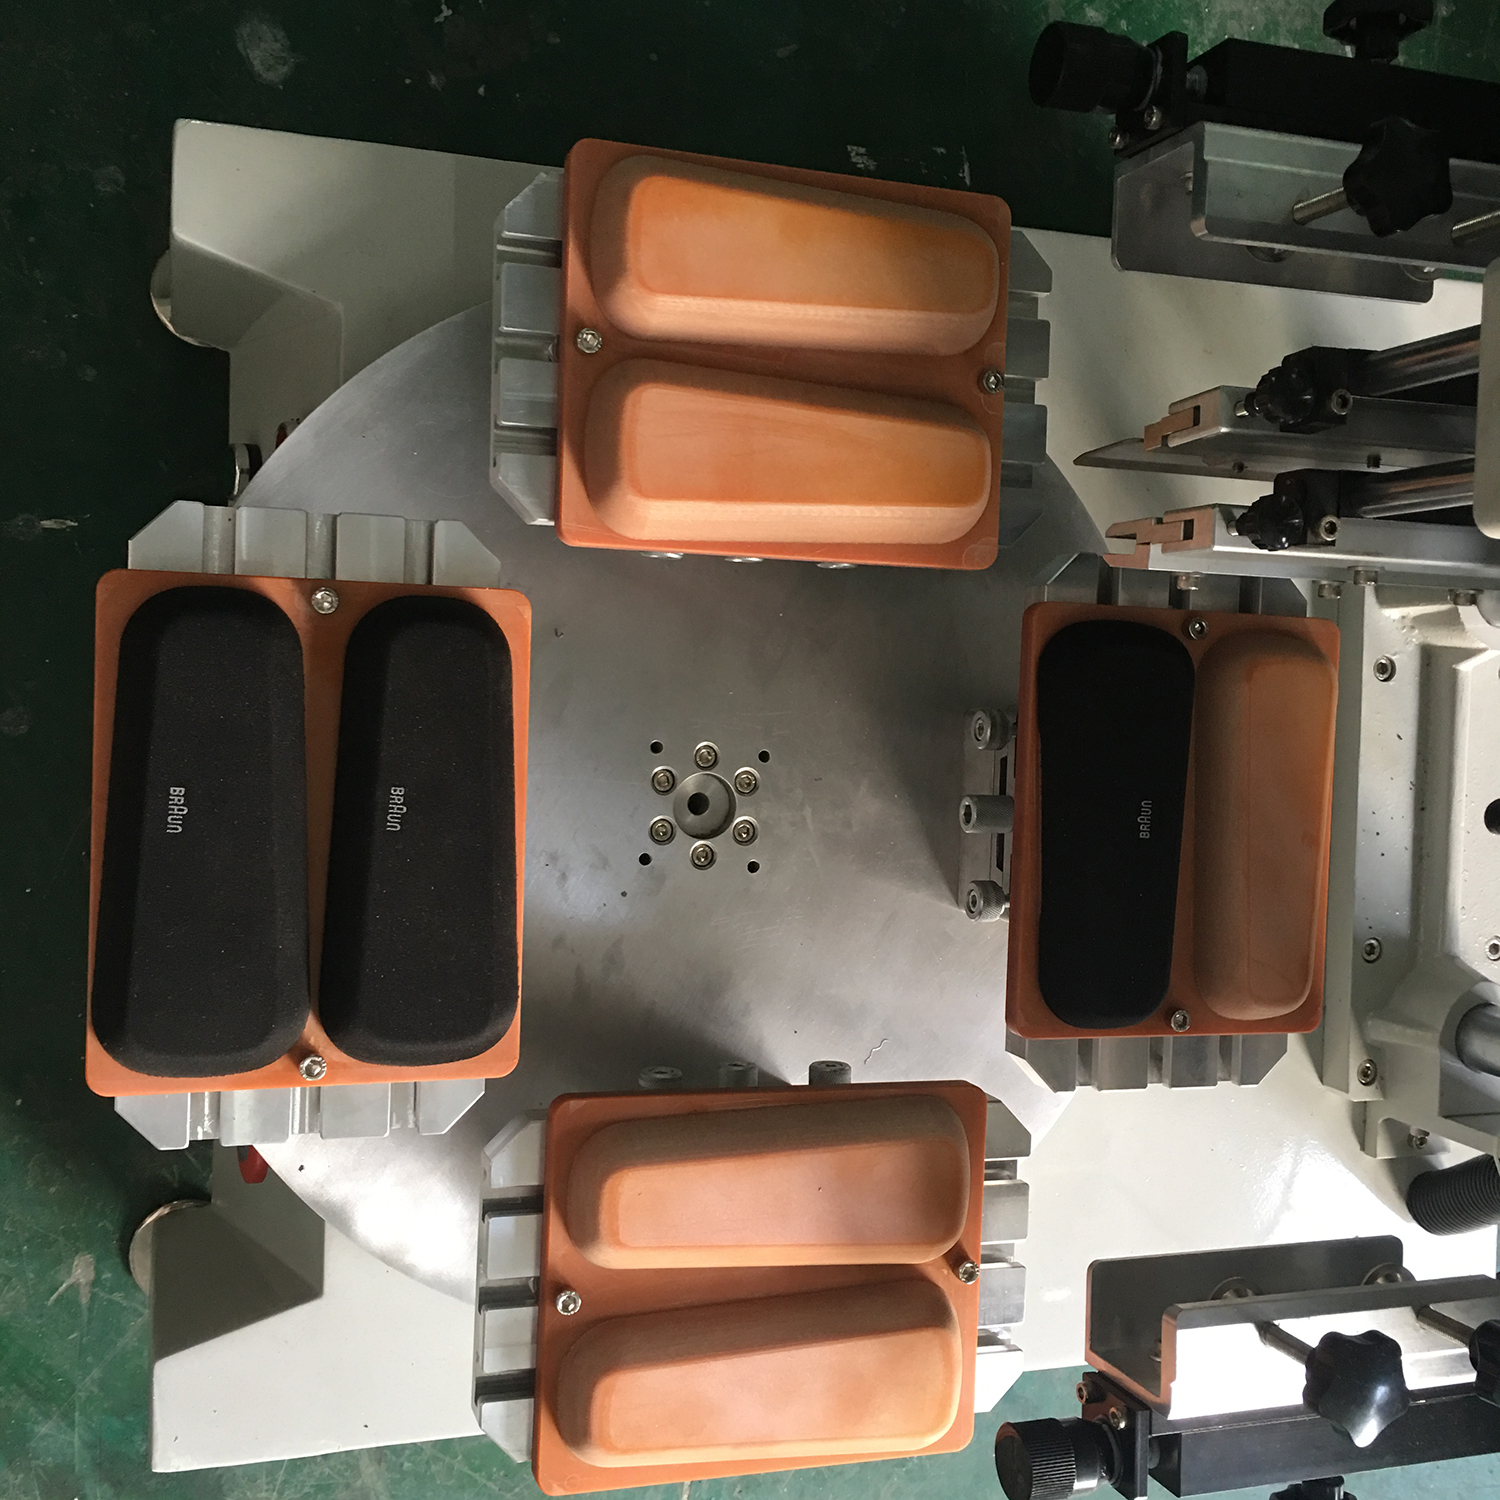 Tabletop Rotary Flat Screen Printing Machine (HX-400R/4)